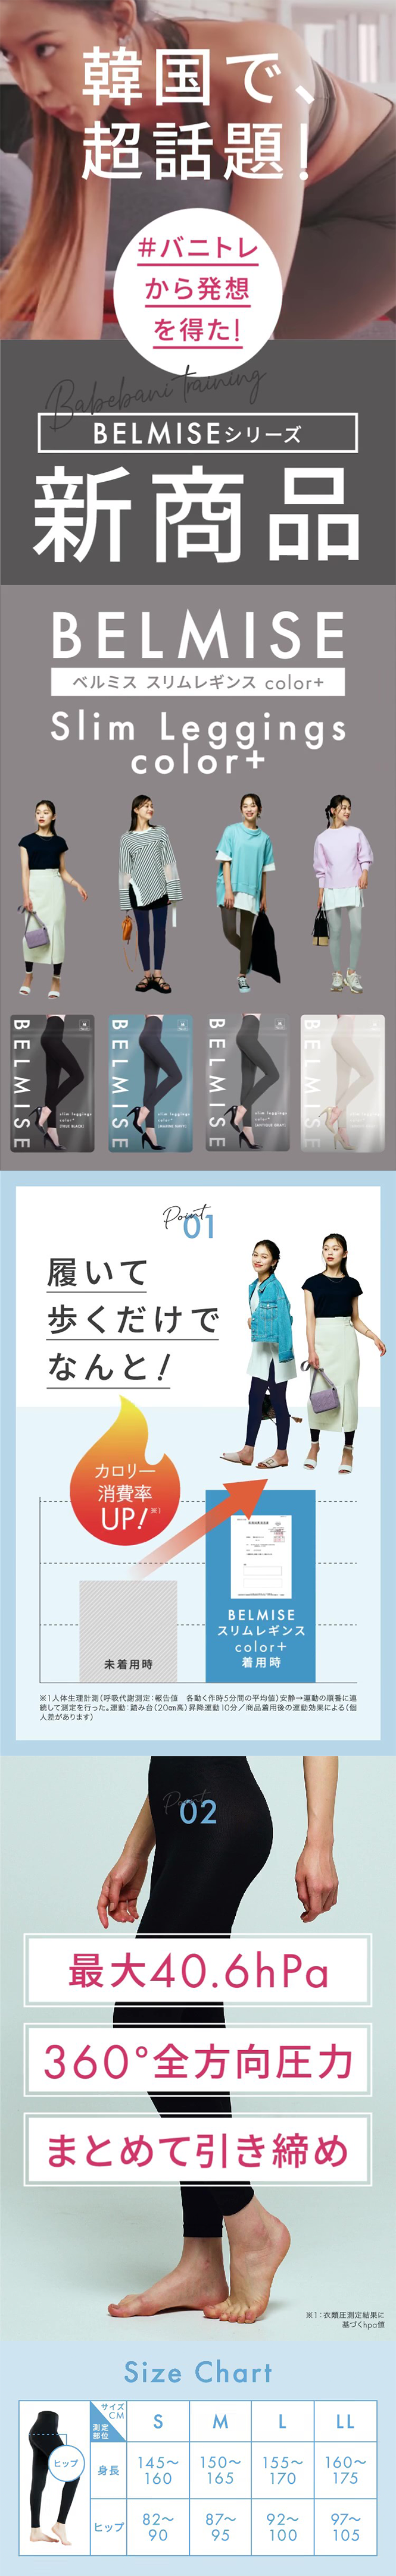 slim leggings color +｜BELMISE｜モニプラ ファンブログ